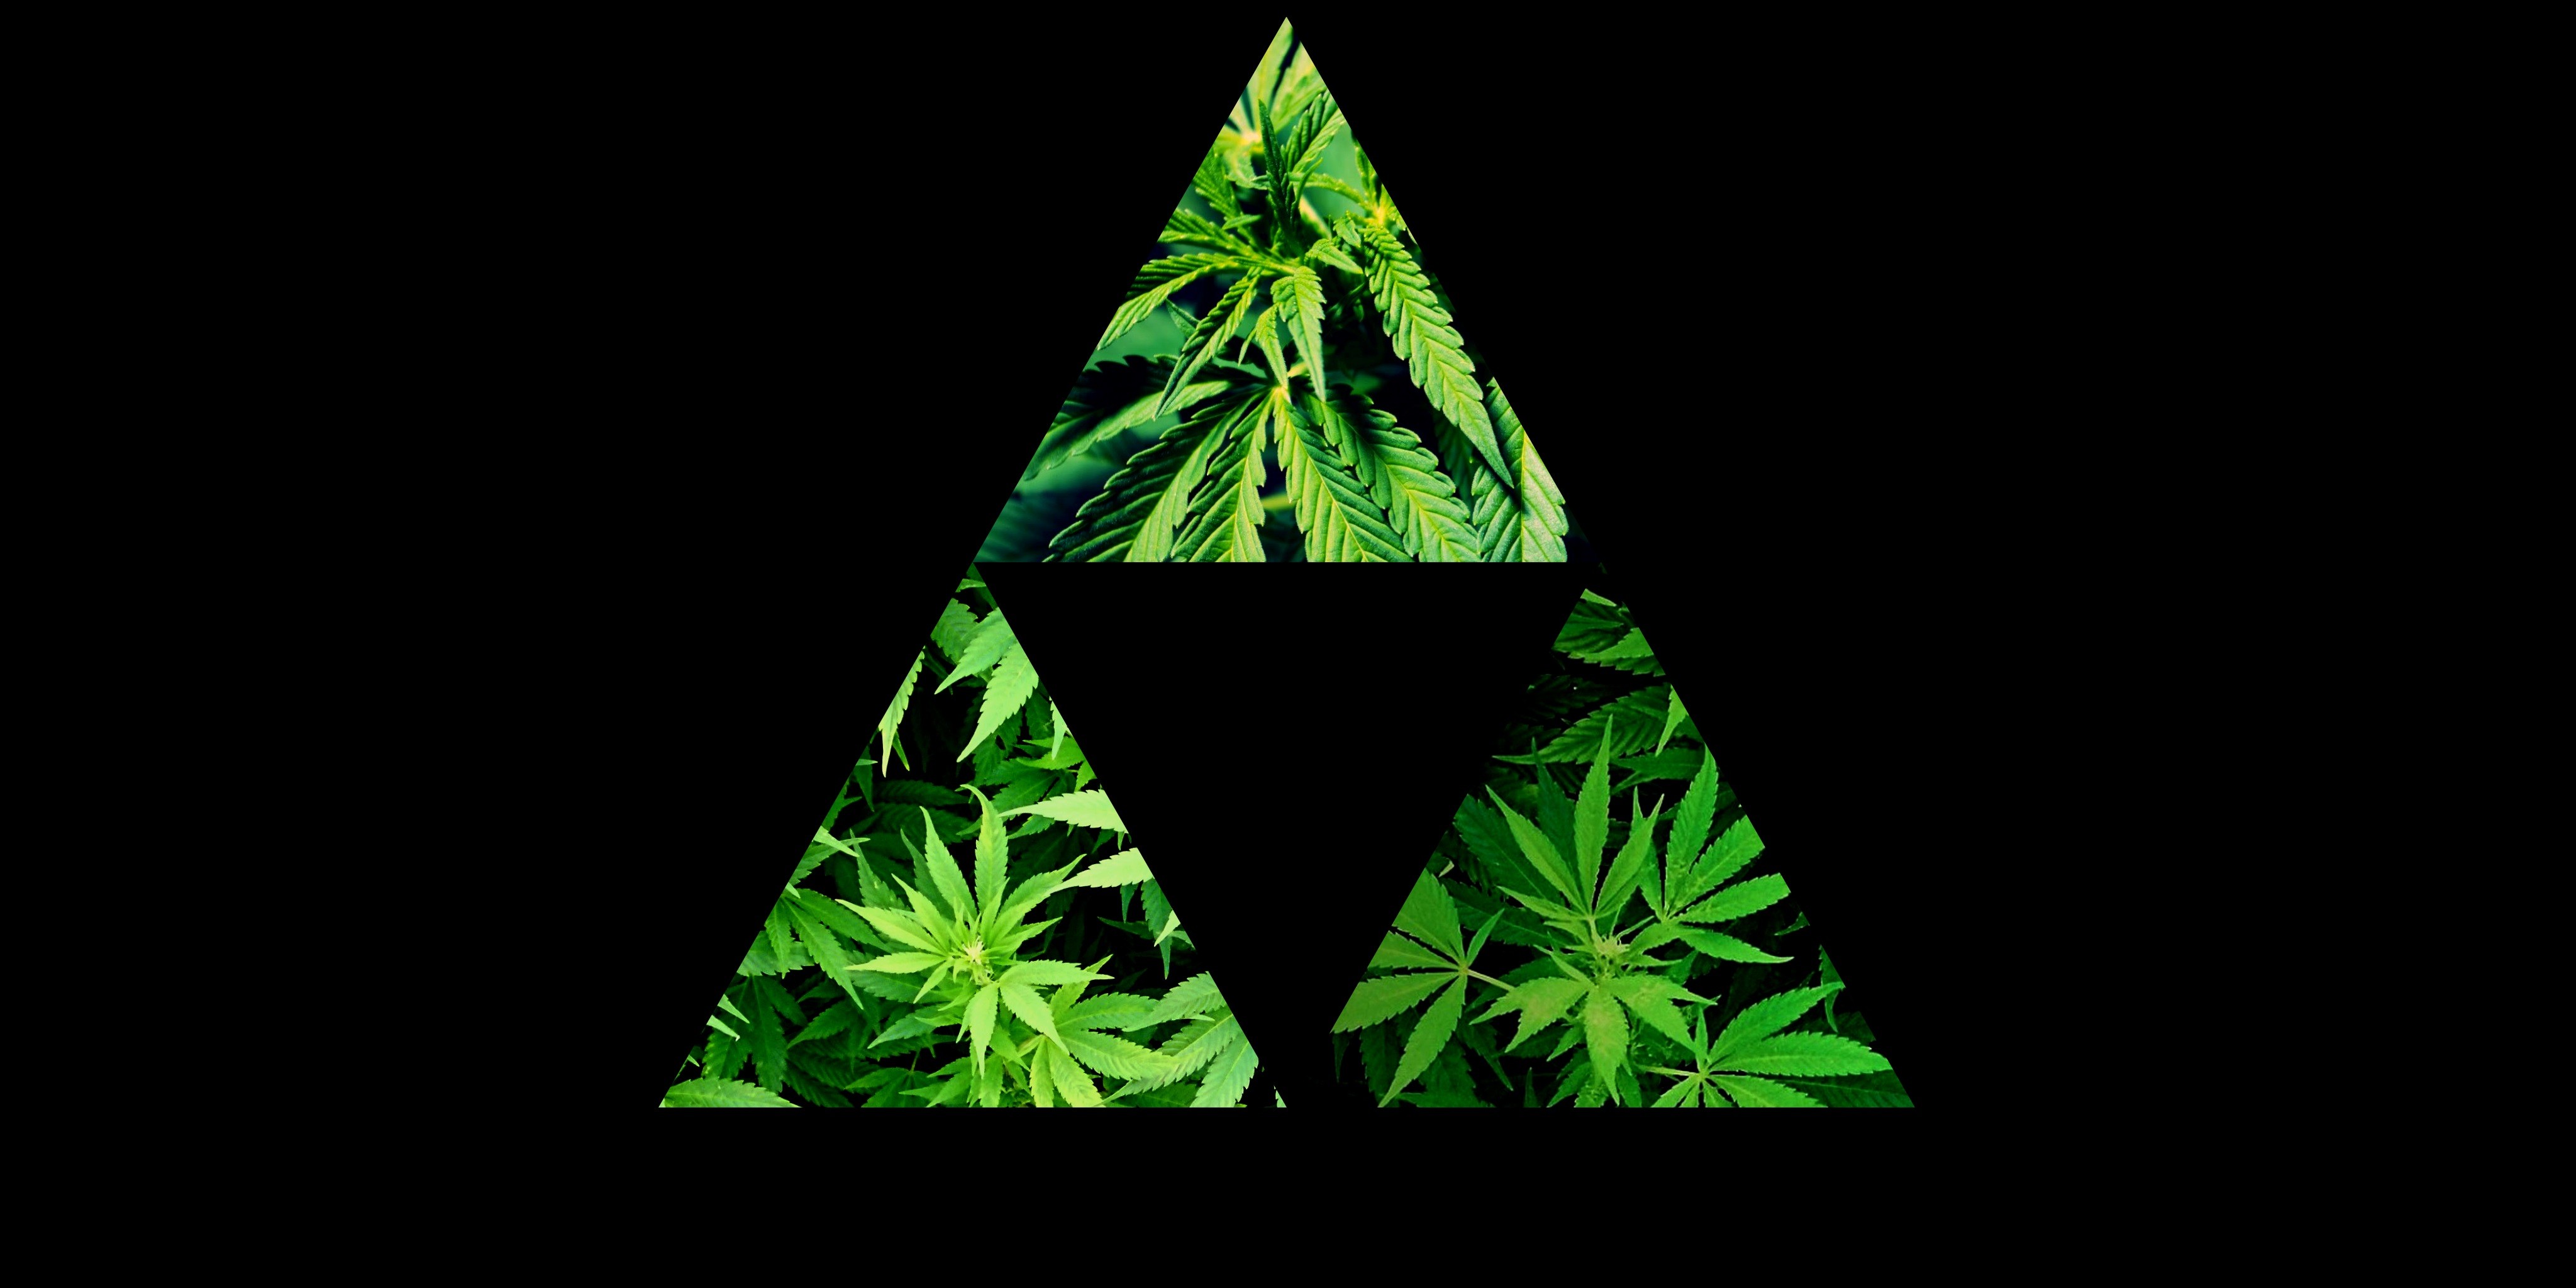 General 4096x2048 Triforce cannabis triangle minimalism drugs black background plants digital art simple background